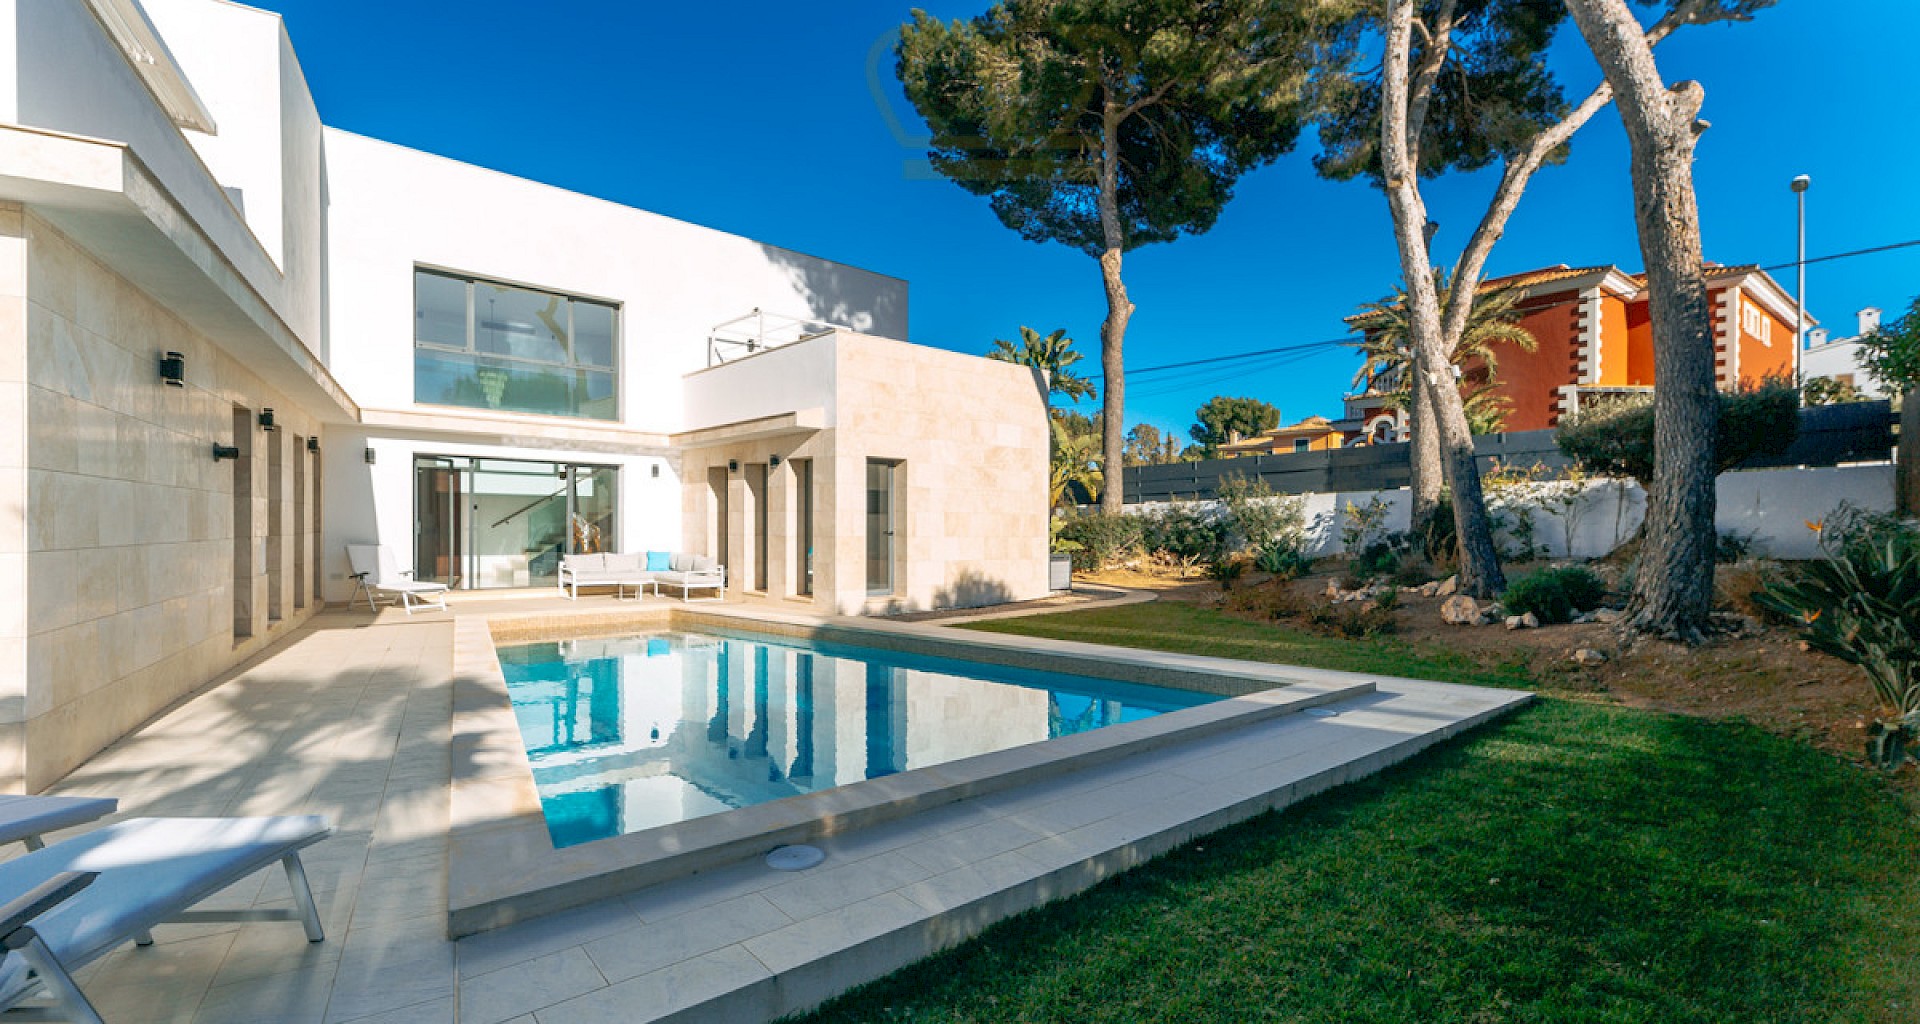 KROHN & LUEDEMANN Large modern villa in Santa Ponsa with pool for sale Grosse Villa in Santa Ponsa 13